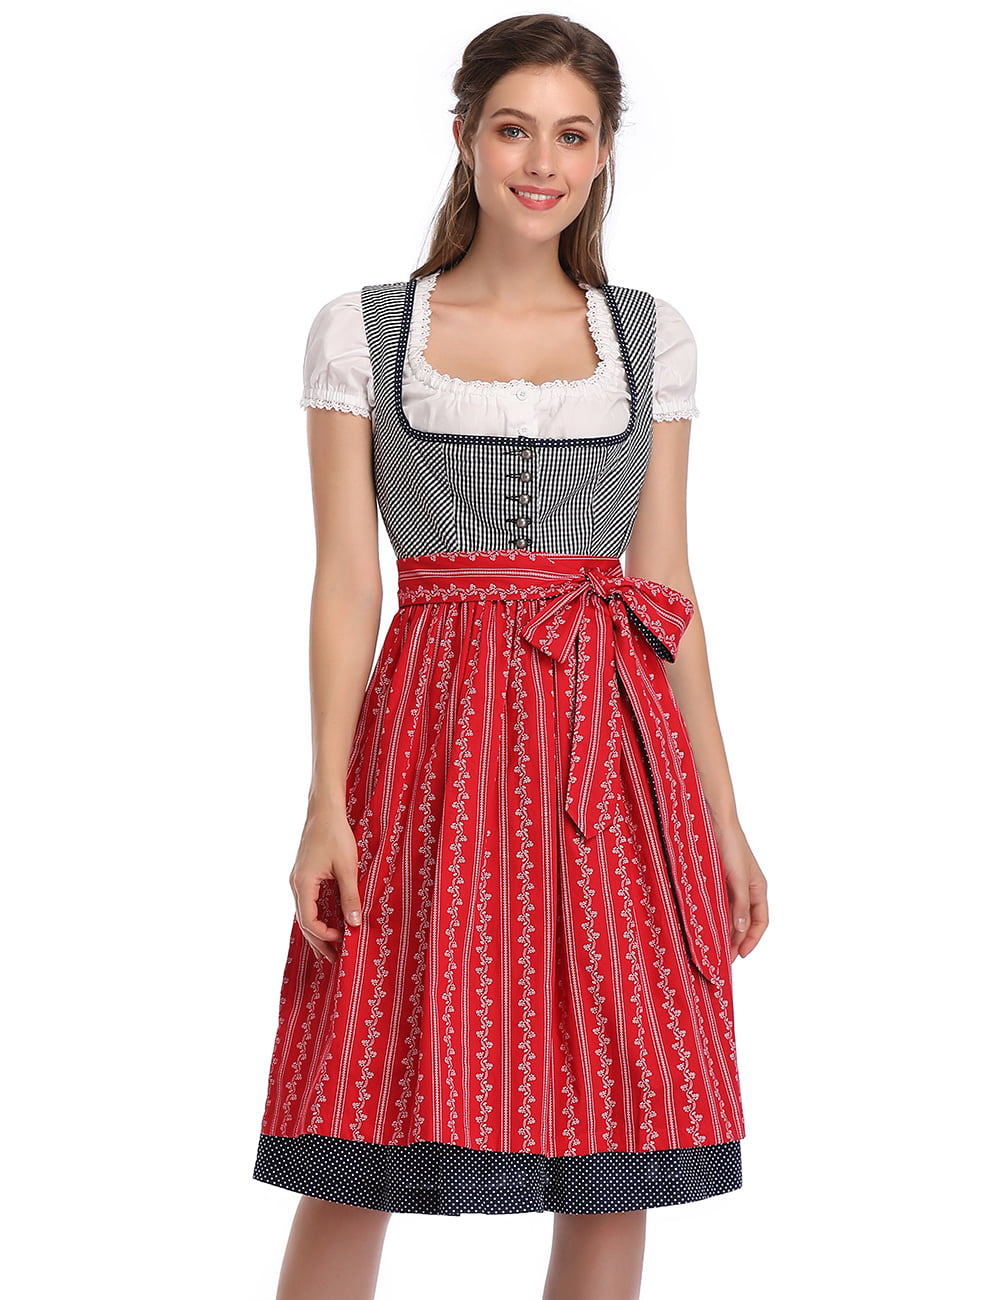 Gillberry Womens Dirndl Dress Traditional Bavarian Oktoberfest Costumes for Halloween Carnival